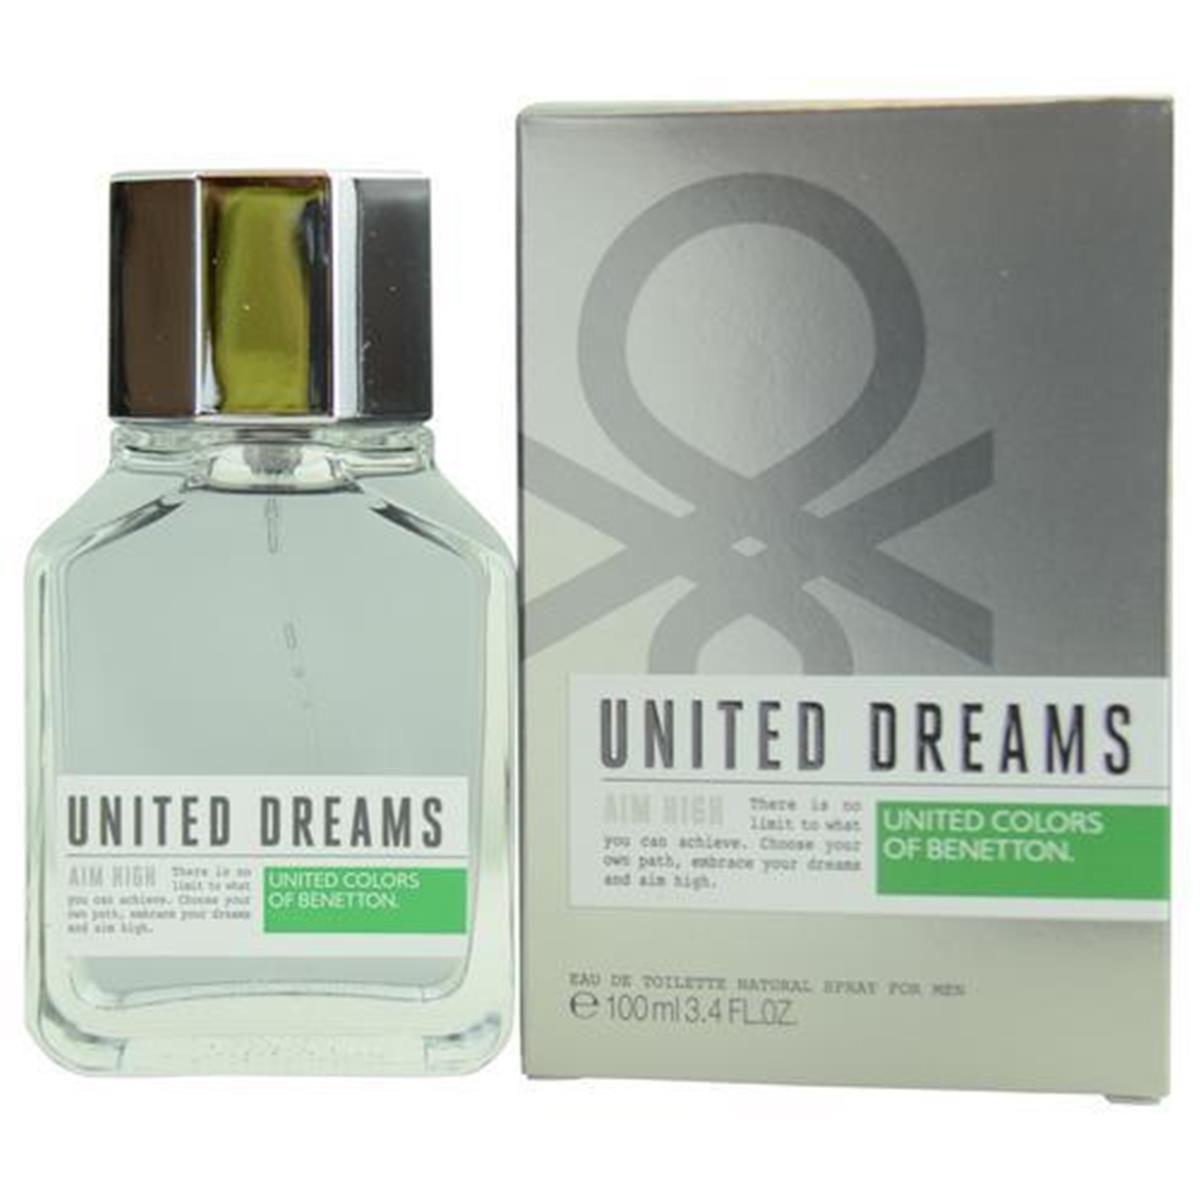 Shop Benetton 285673 3.4 oz United Dreams Aim High Eau De Toilette Spray